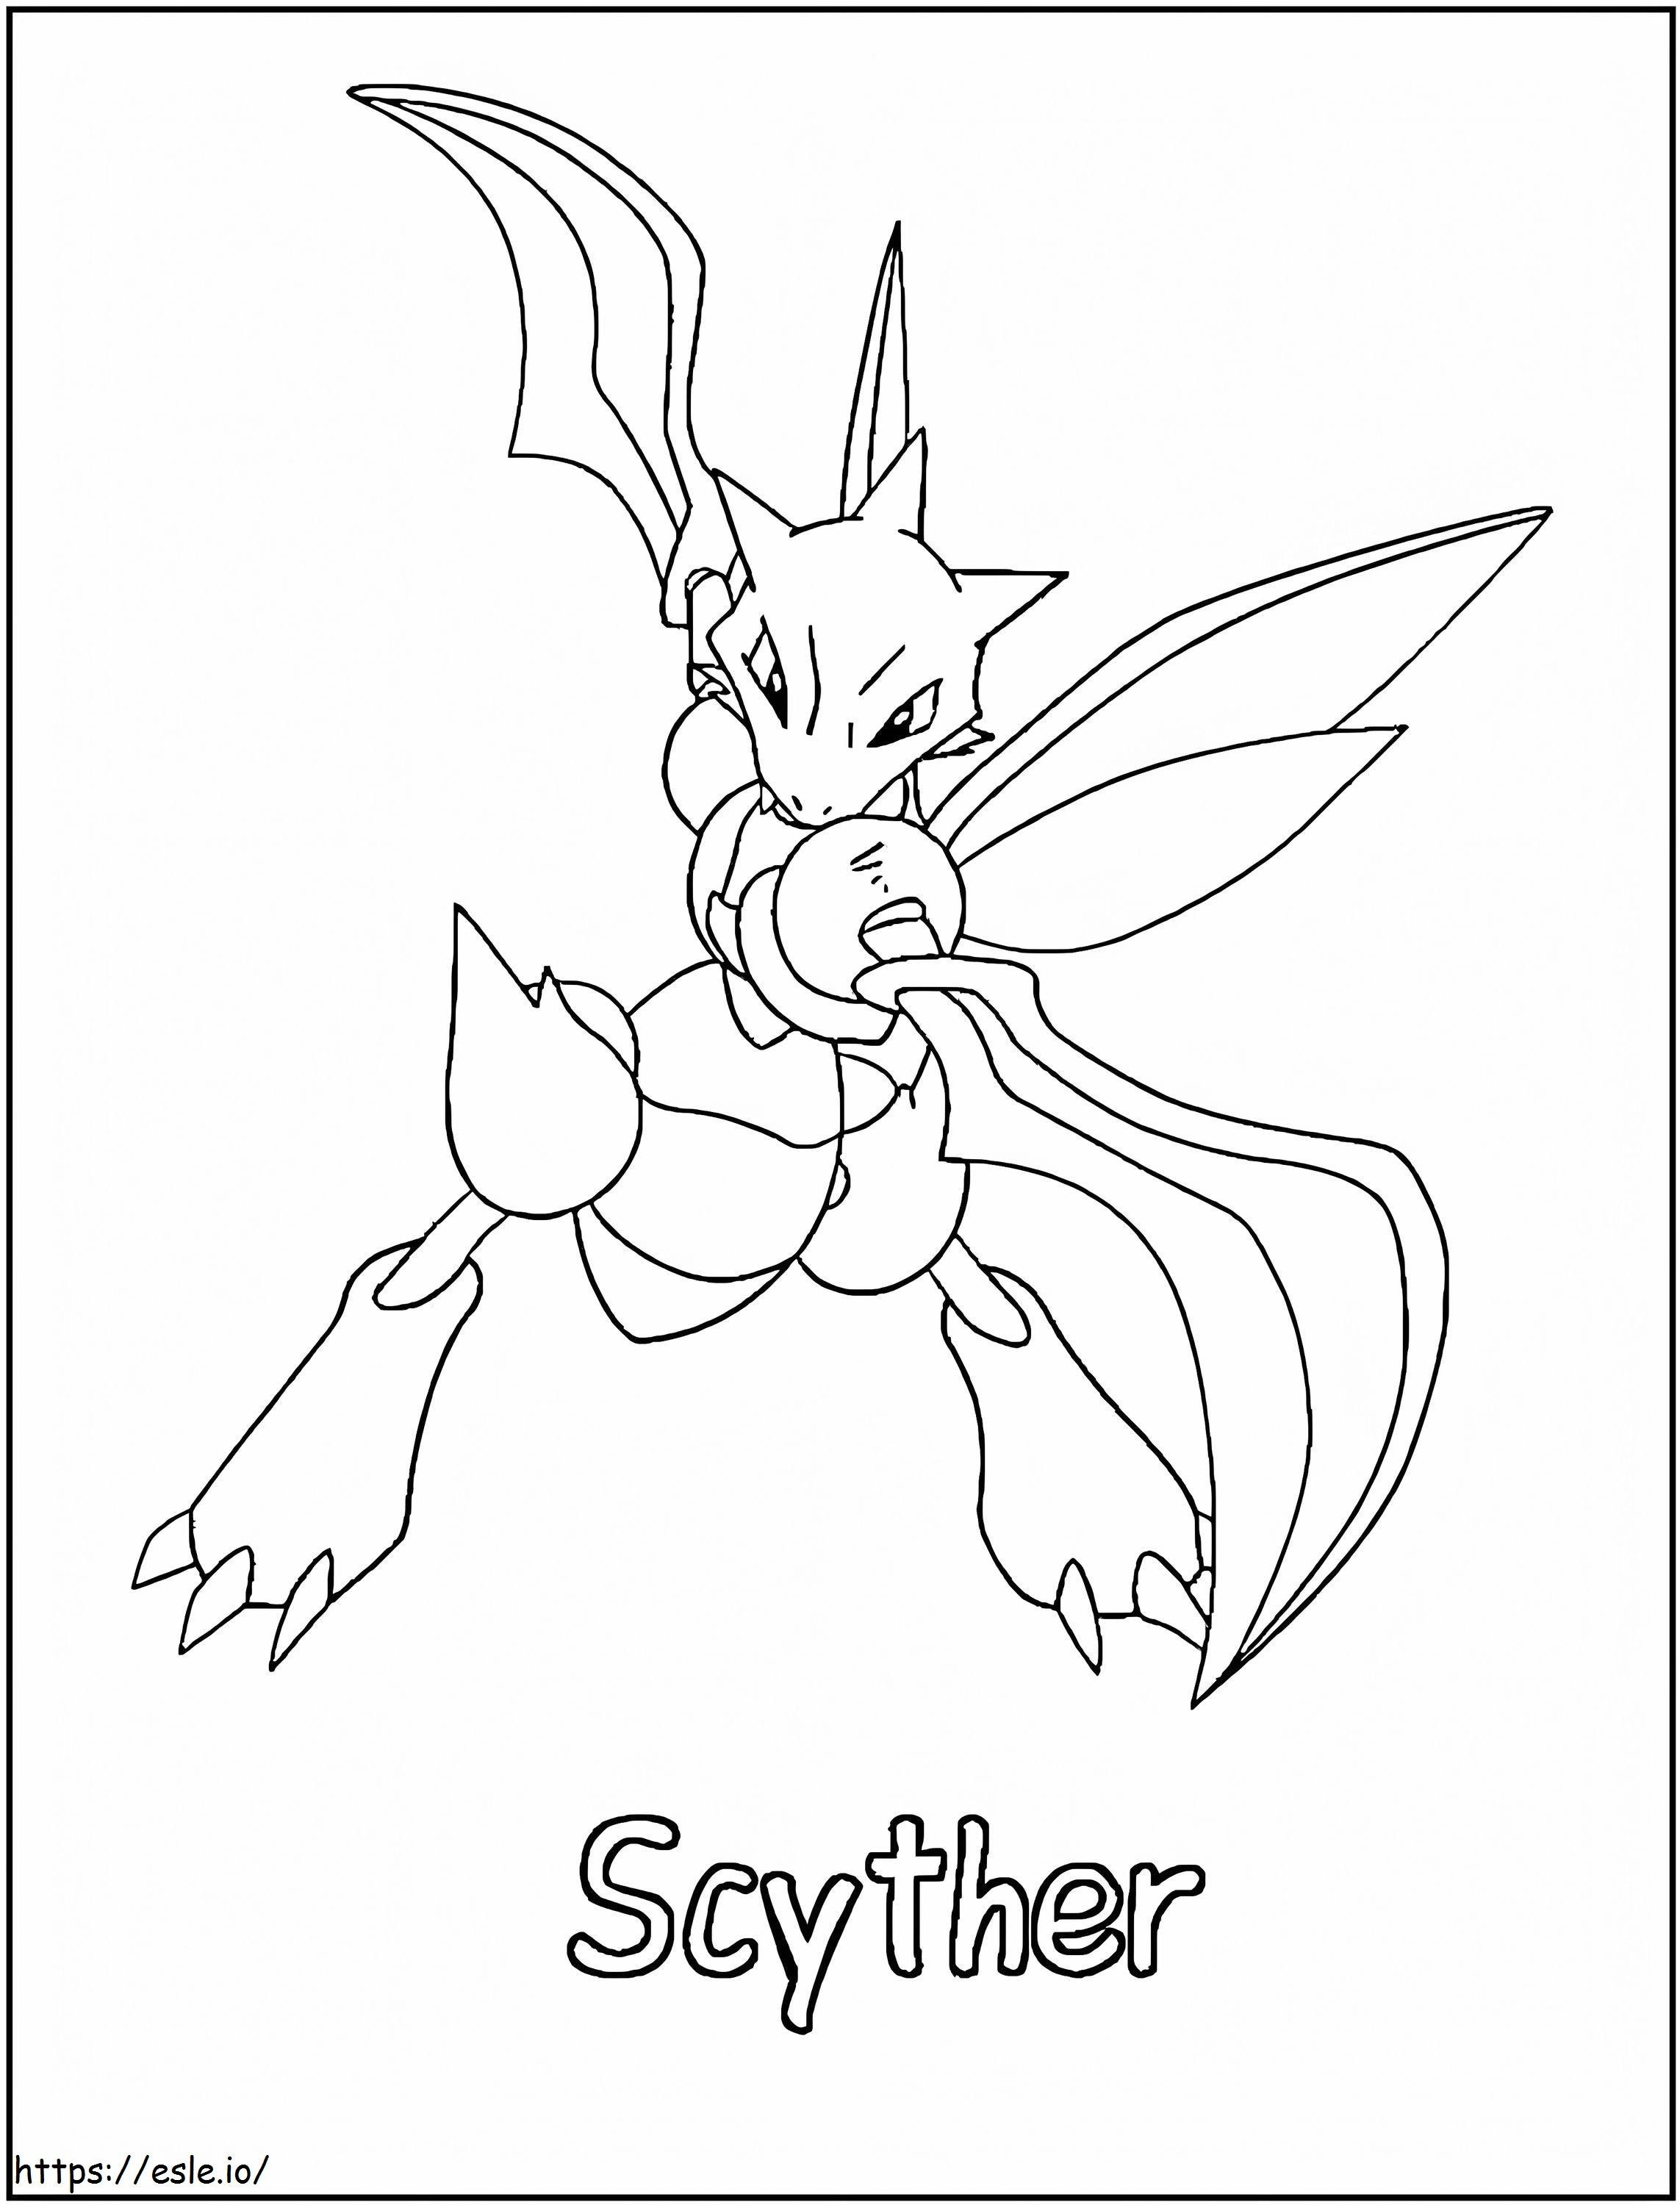 Scyther in Pokémon kleurplaat kleurplaat